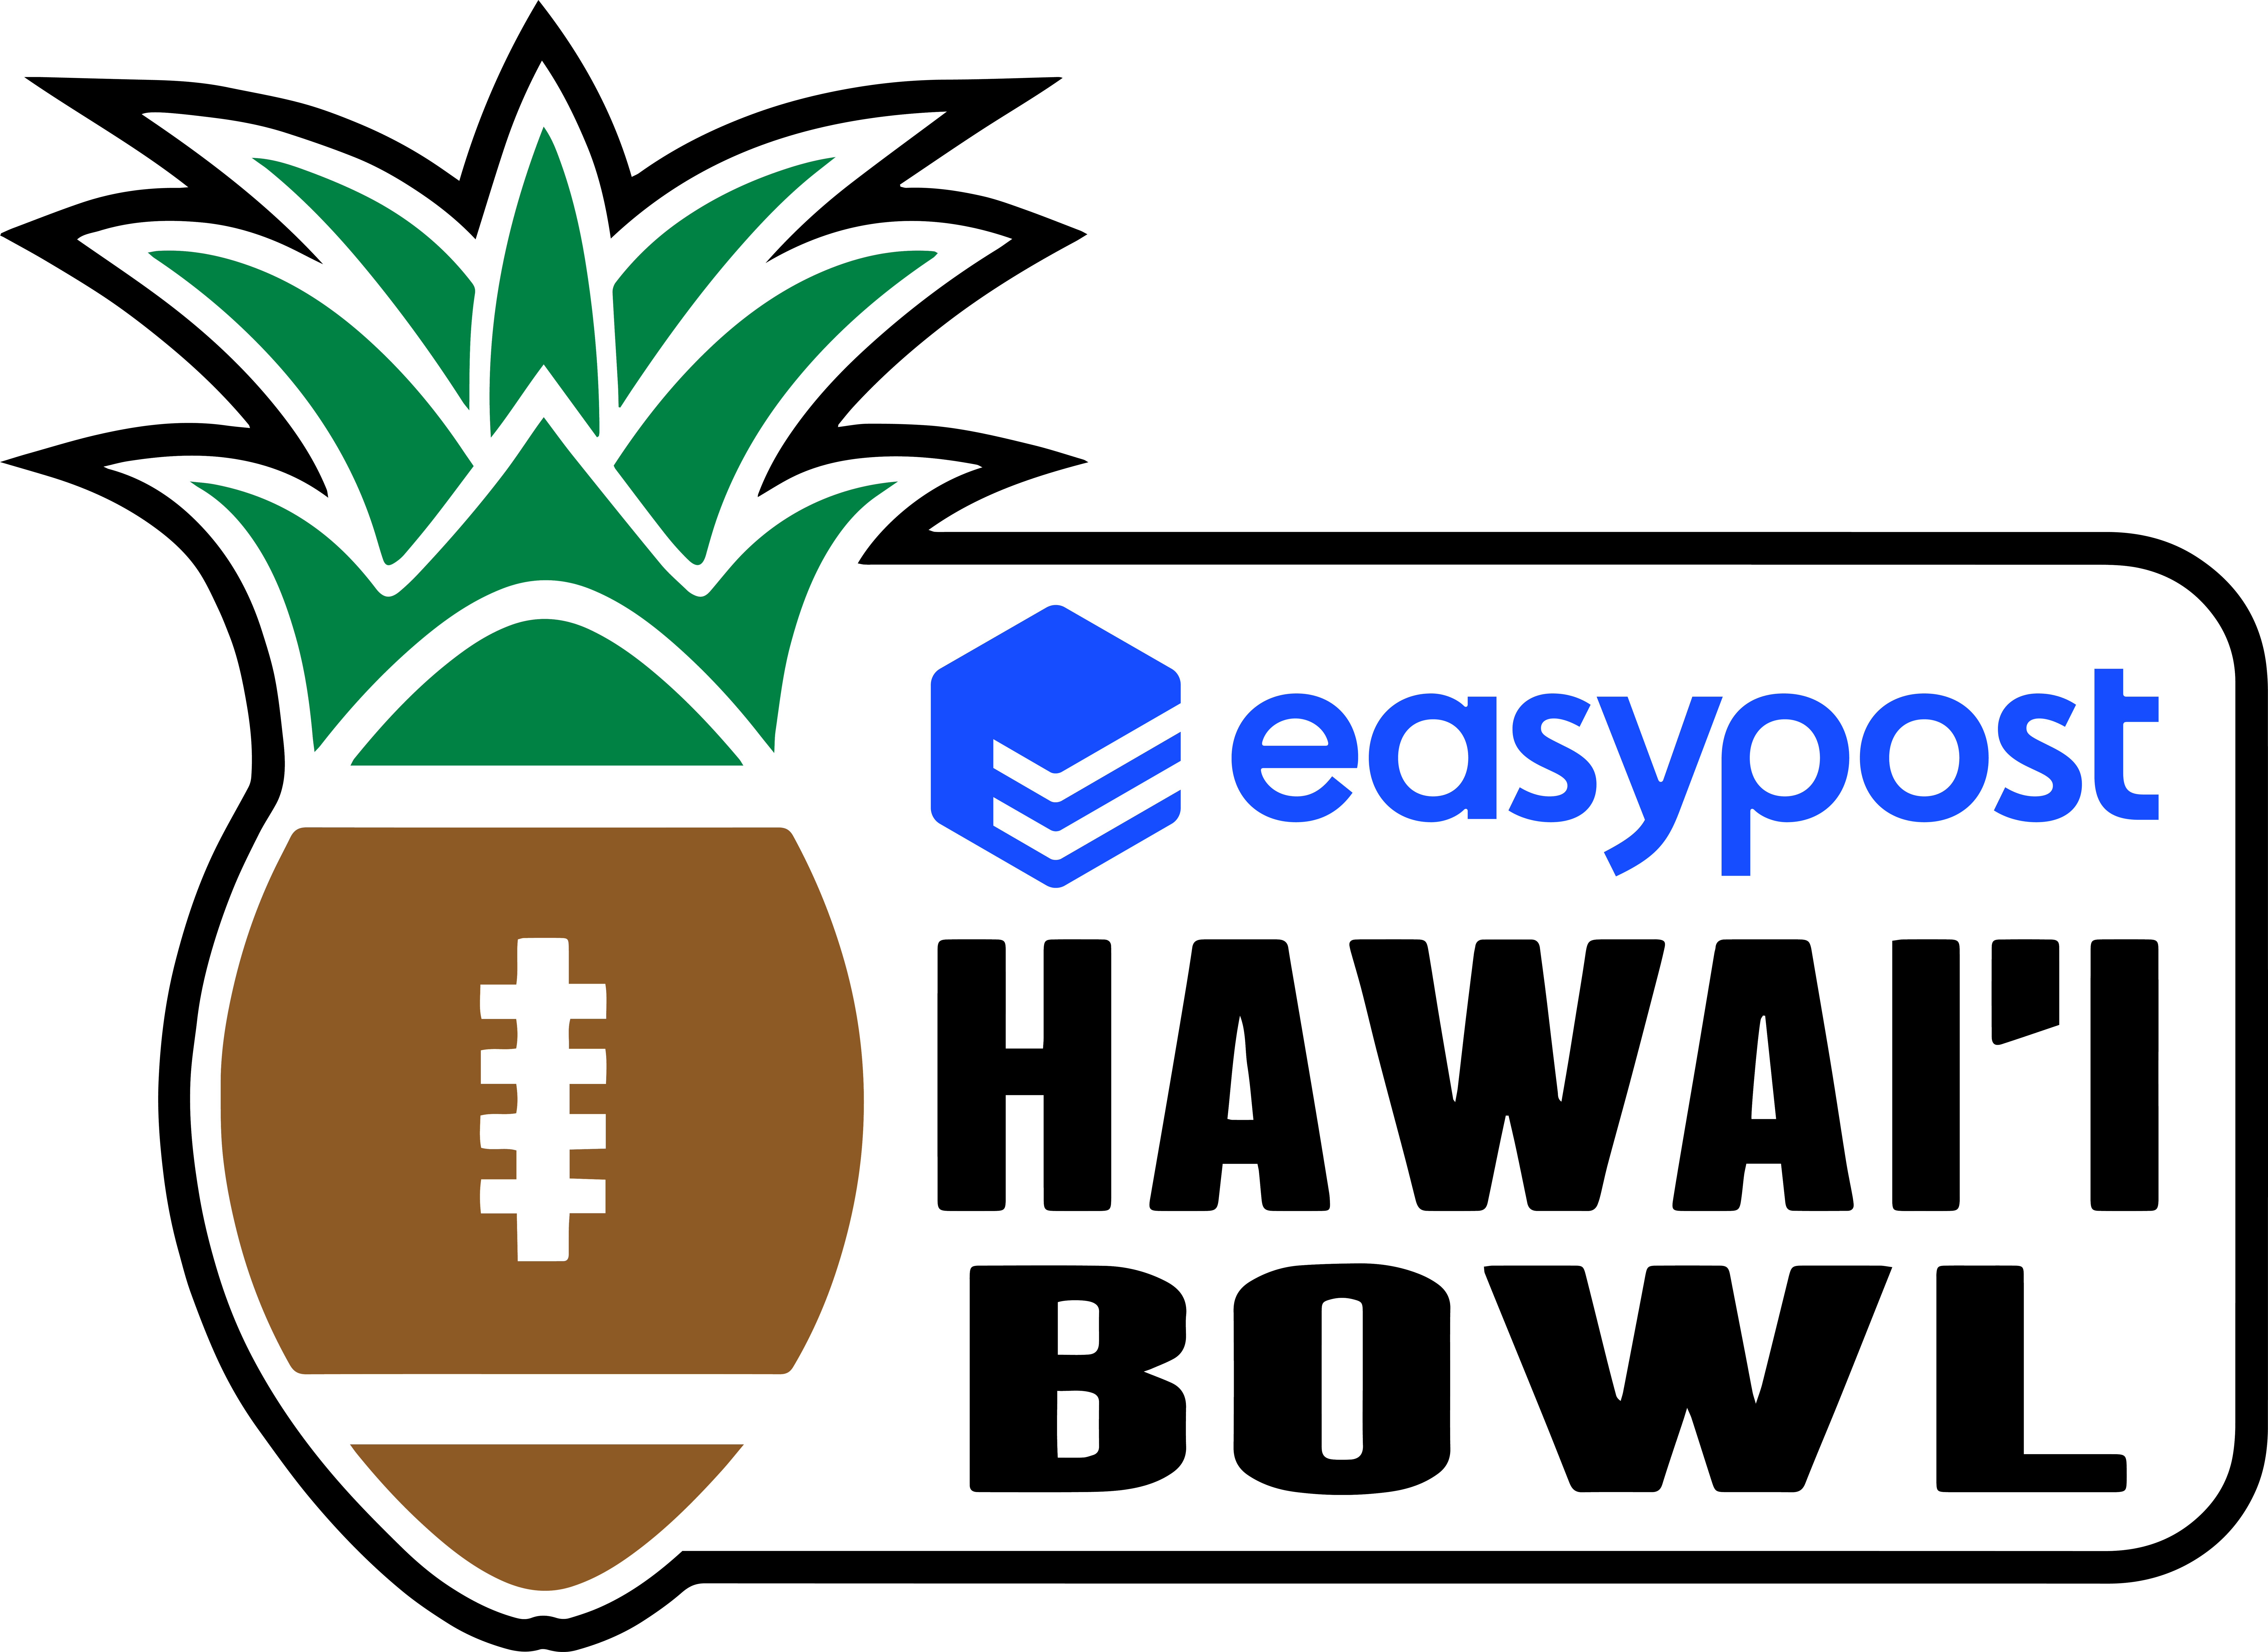 SoFi Hawai’i Bowl